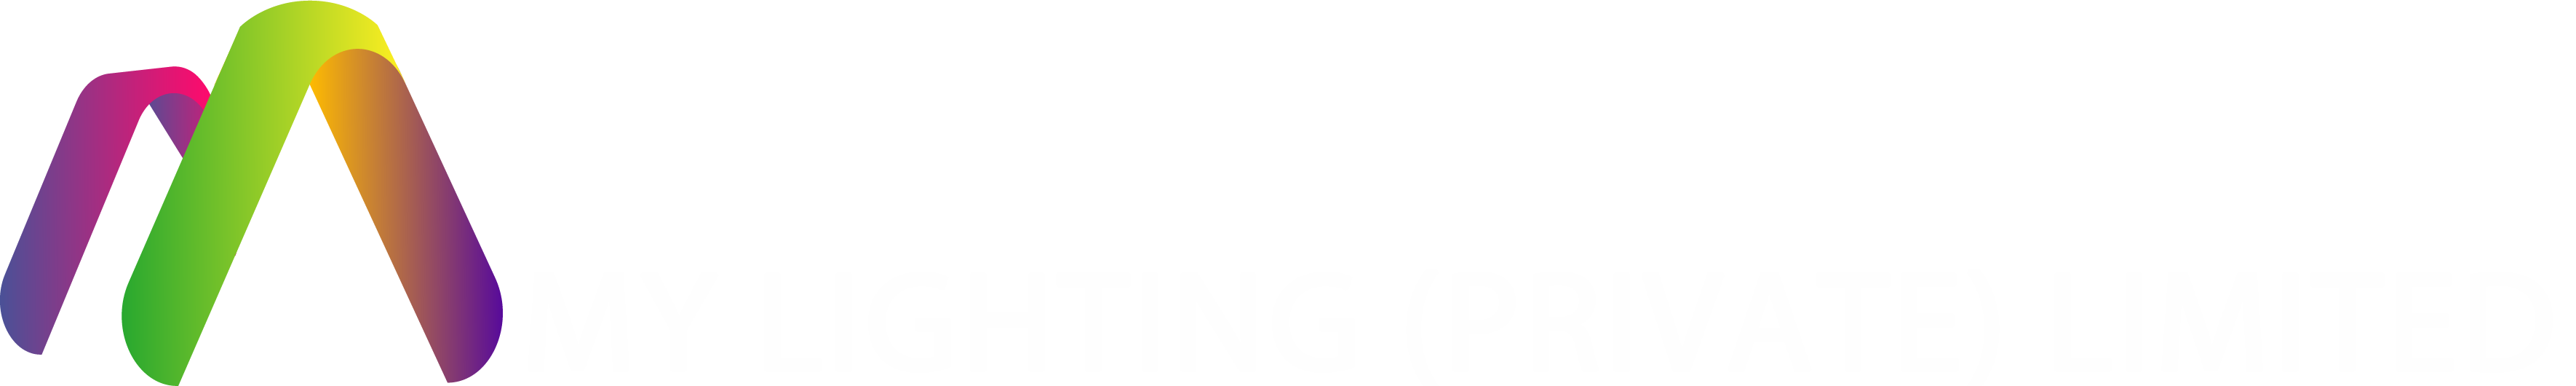 My Lighting - Logo White